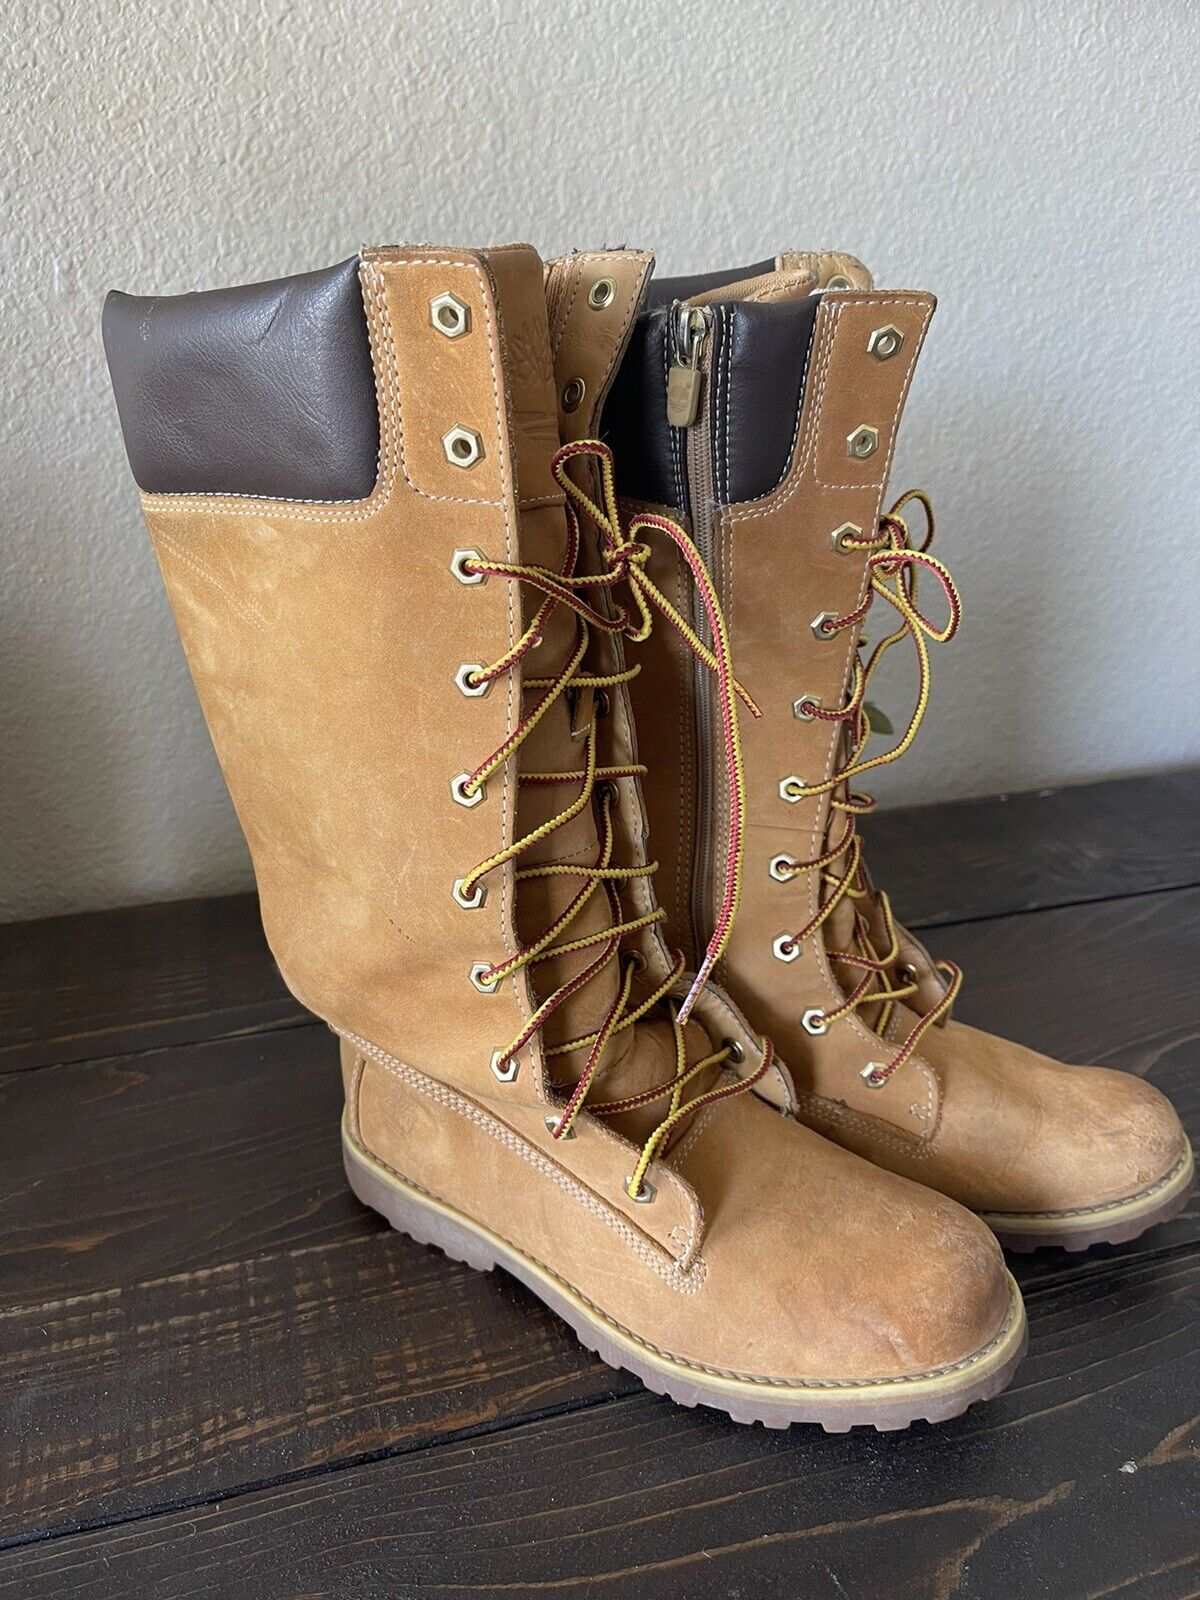 lección Hablar con Flor de la ciudad Timberland Asphalt Trail Lace Up Side Zip Boots Childrens Shoes 83980 size  4 | eBay